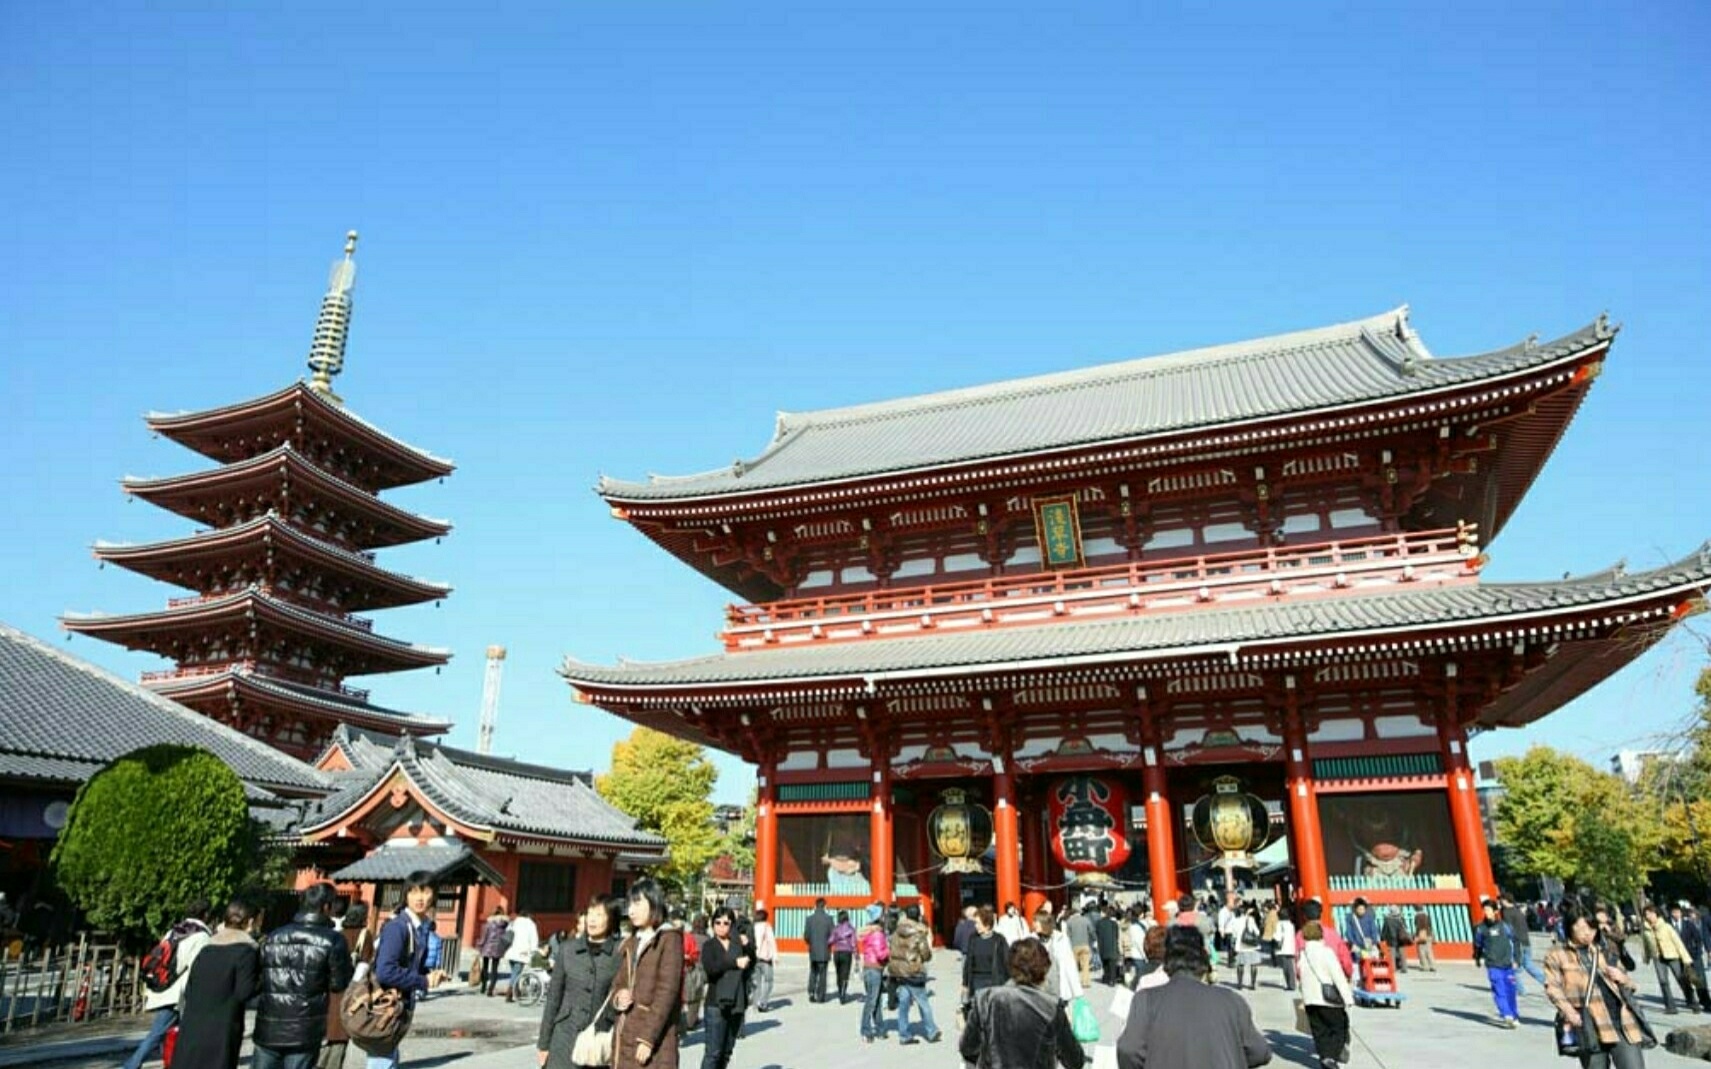 Main gate and Pagoda in Sensouji Temple